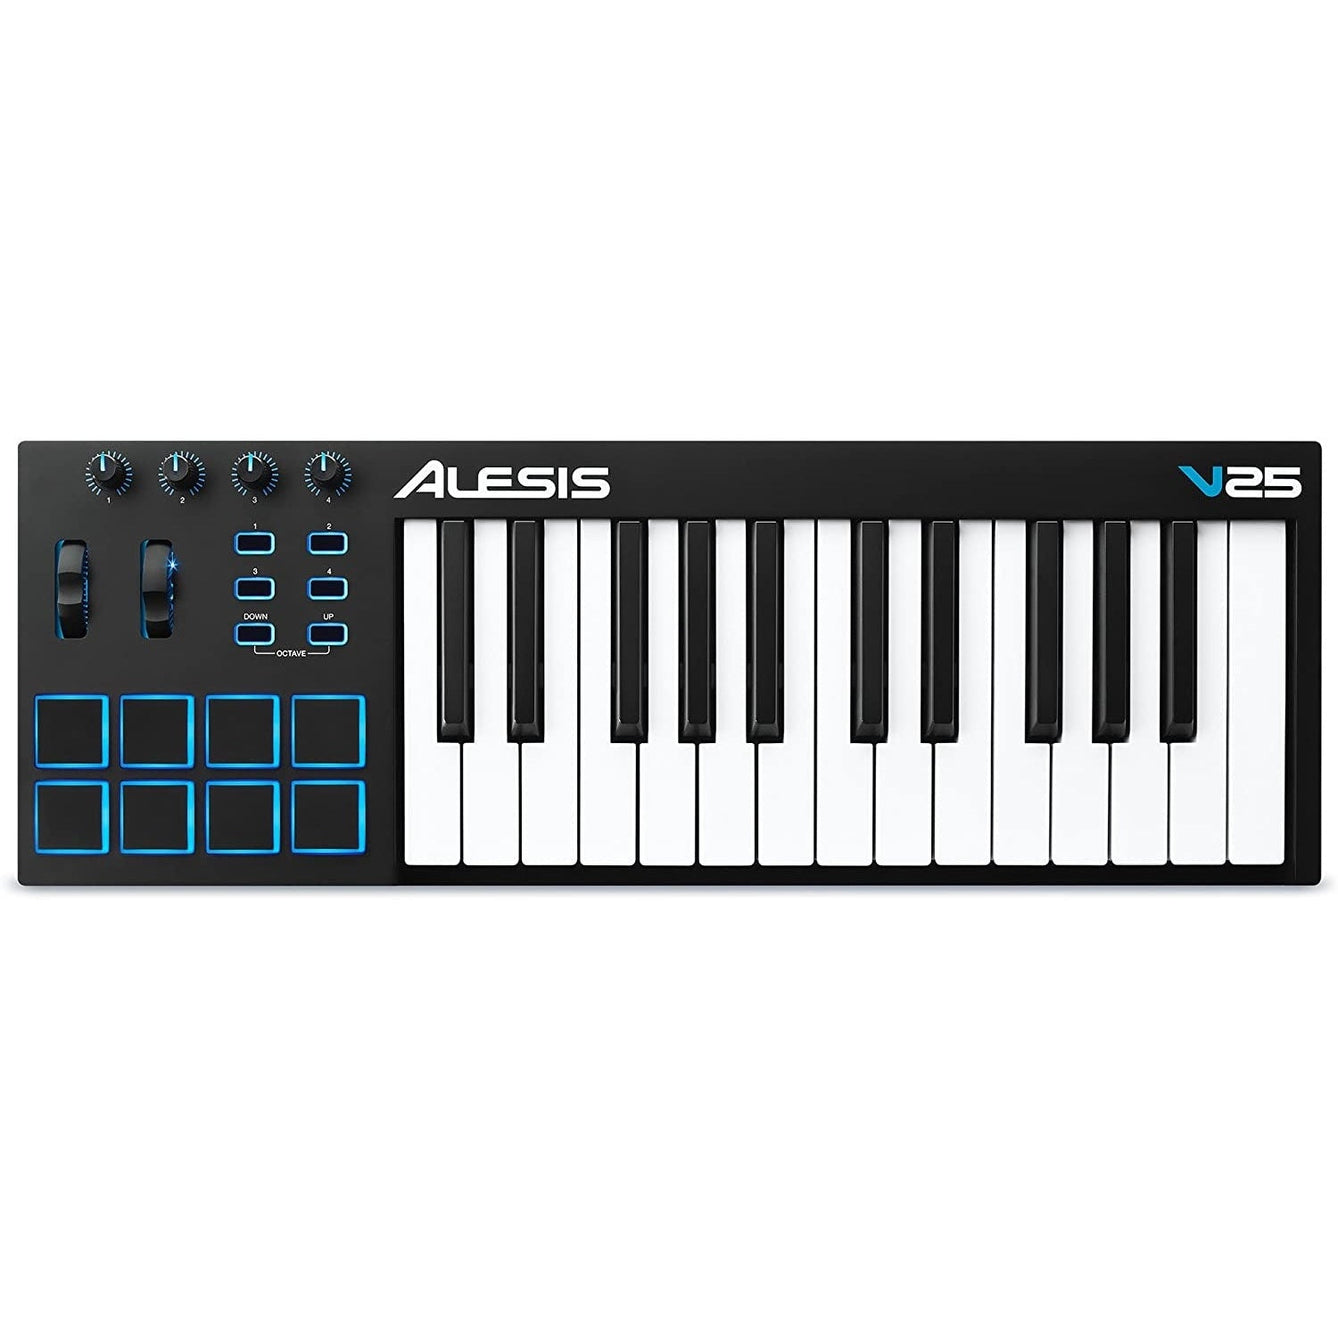 MIDI Keyboard Controller Alesis V25-Mai Nguyên Music